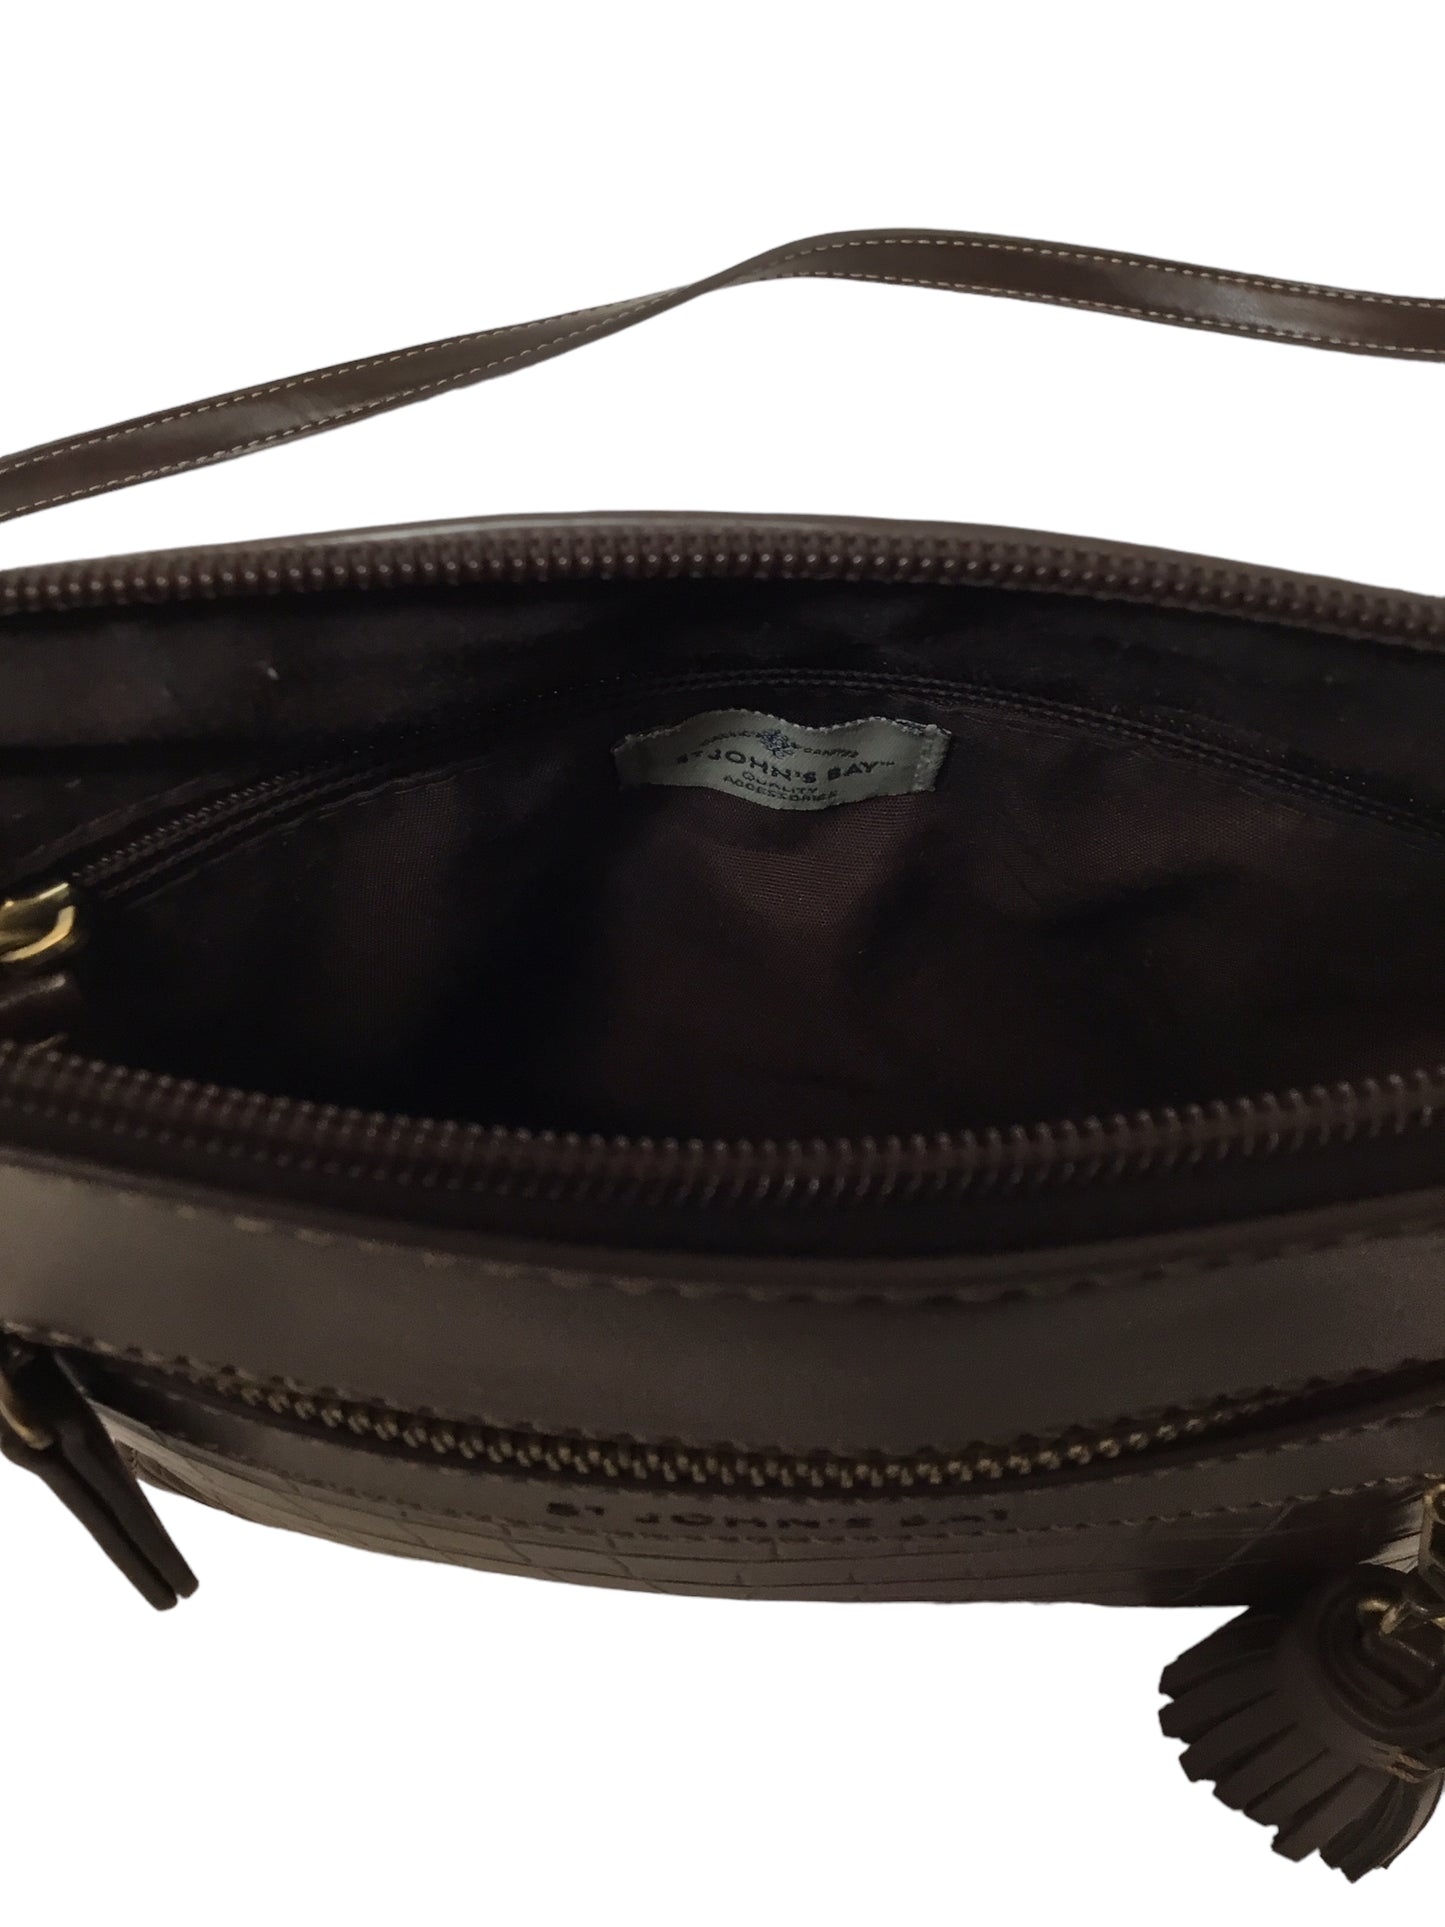 Handbag By St Johns Bay  Size: Small